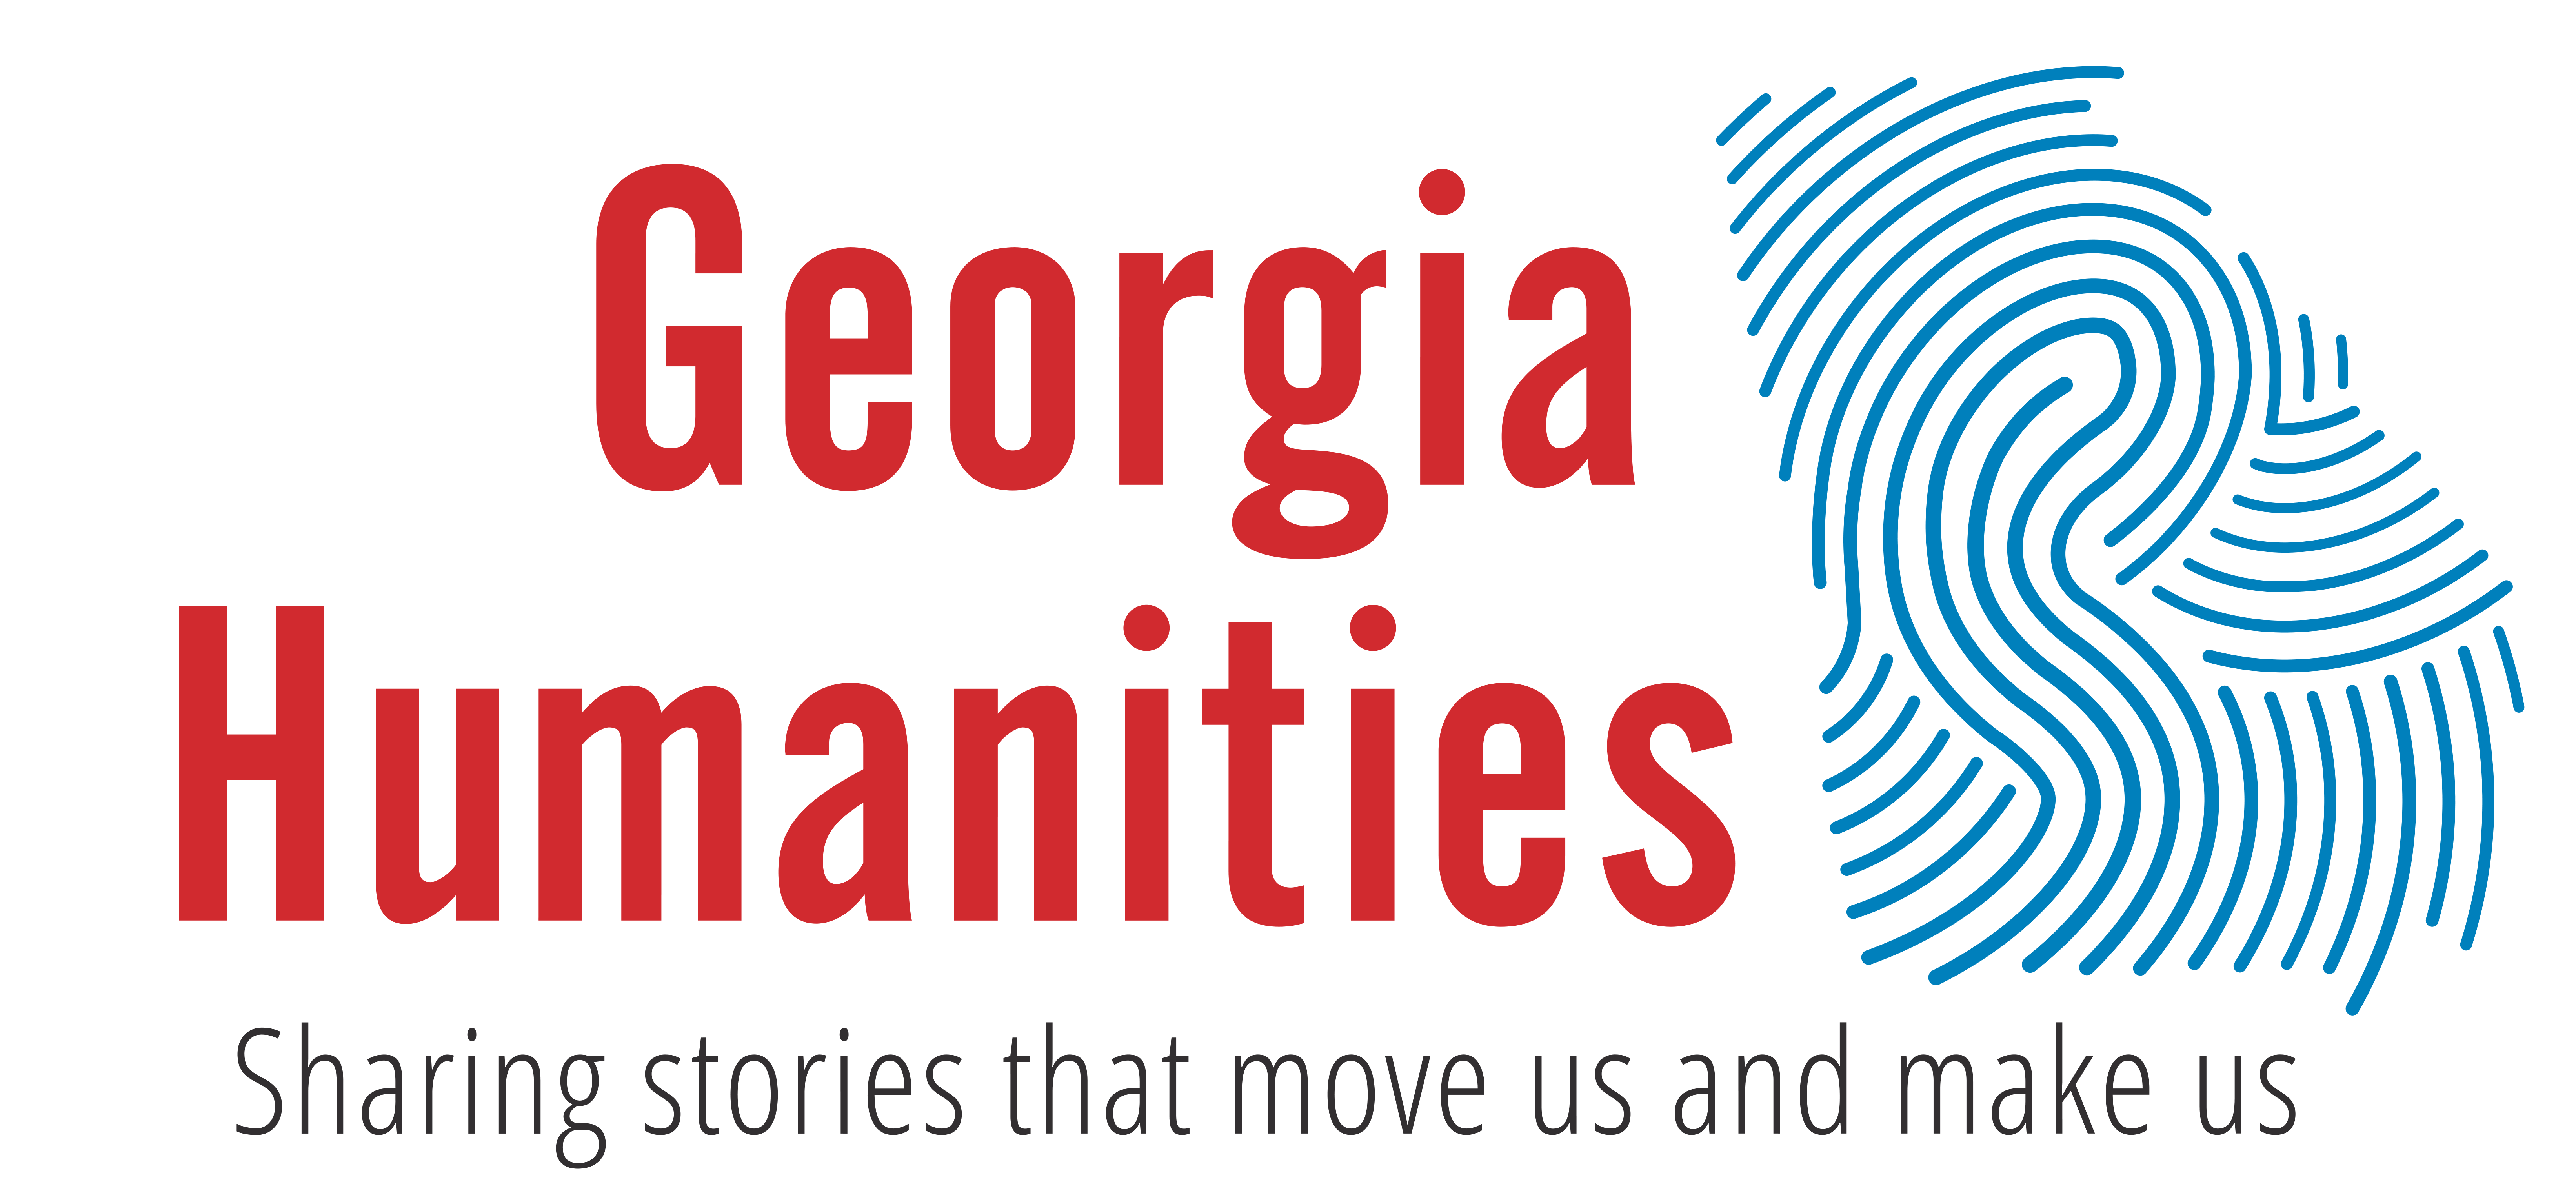 Georgia Humanities logo